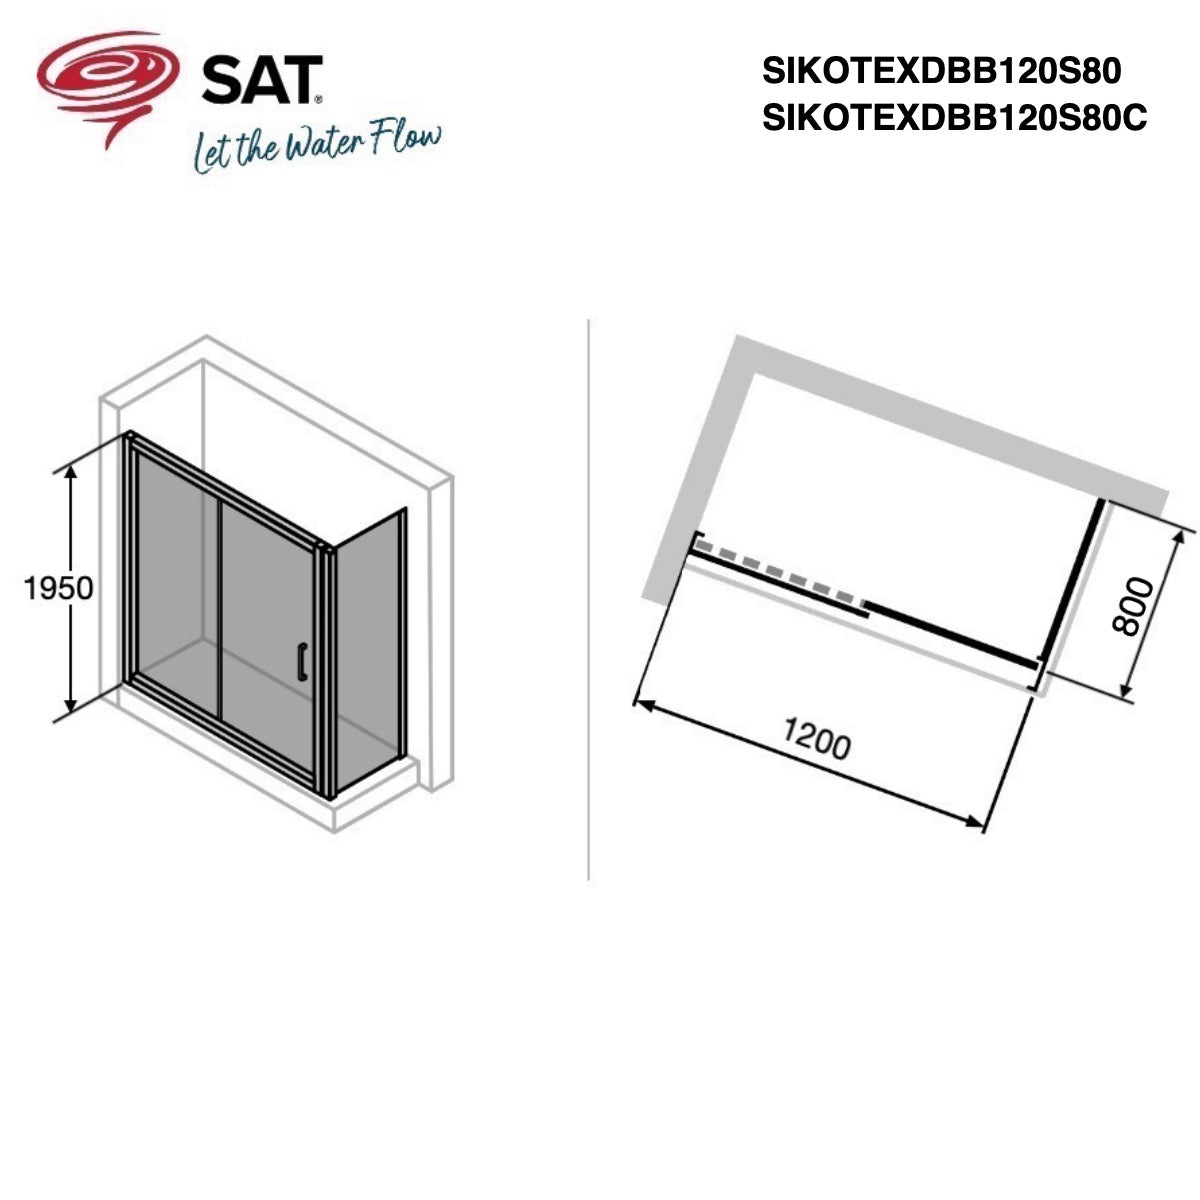 SIKOTEXDBB120S80C SAT TEX 120 x 80 cm pravokotna tuš kabina brez okvirja črna